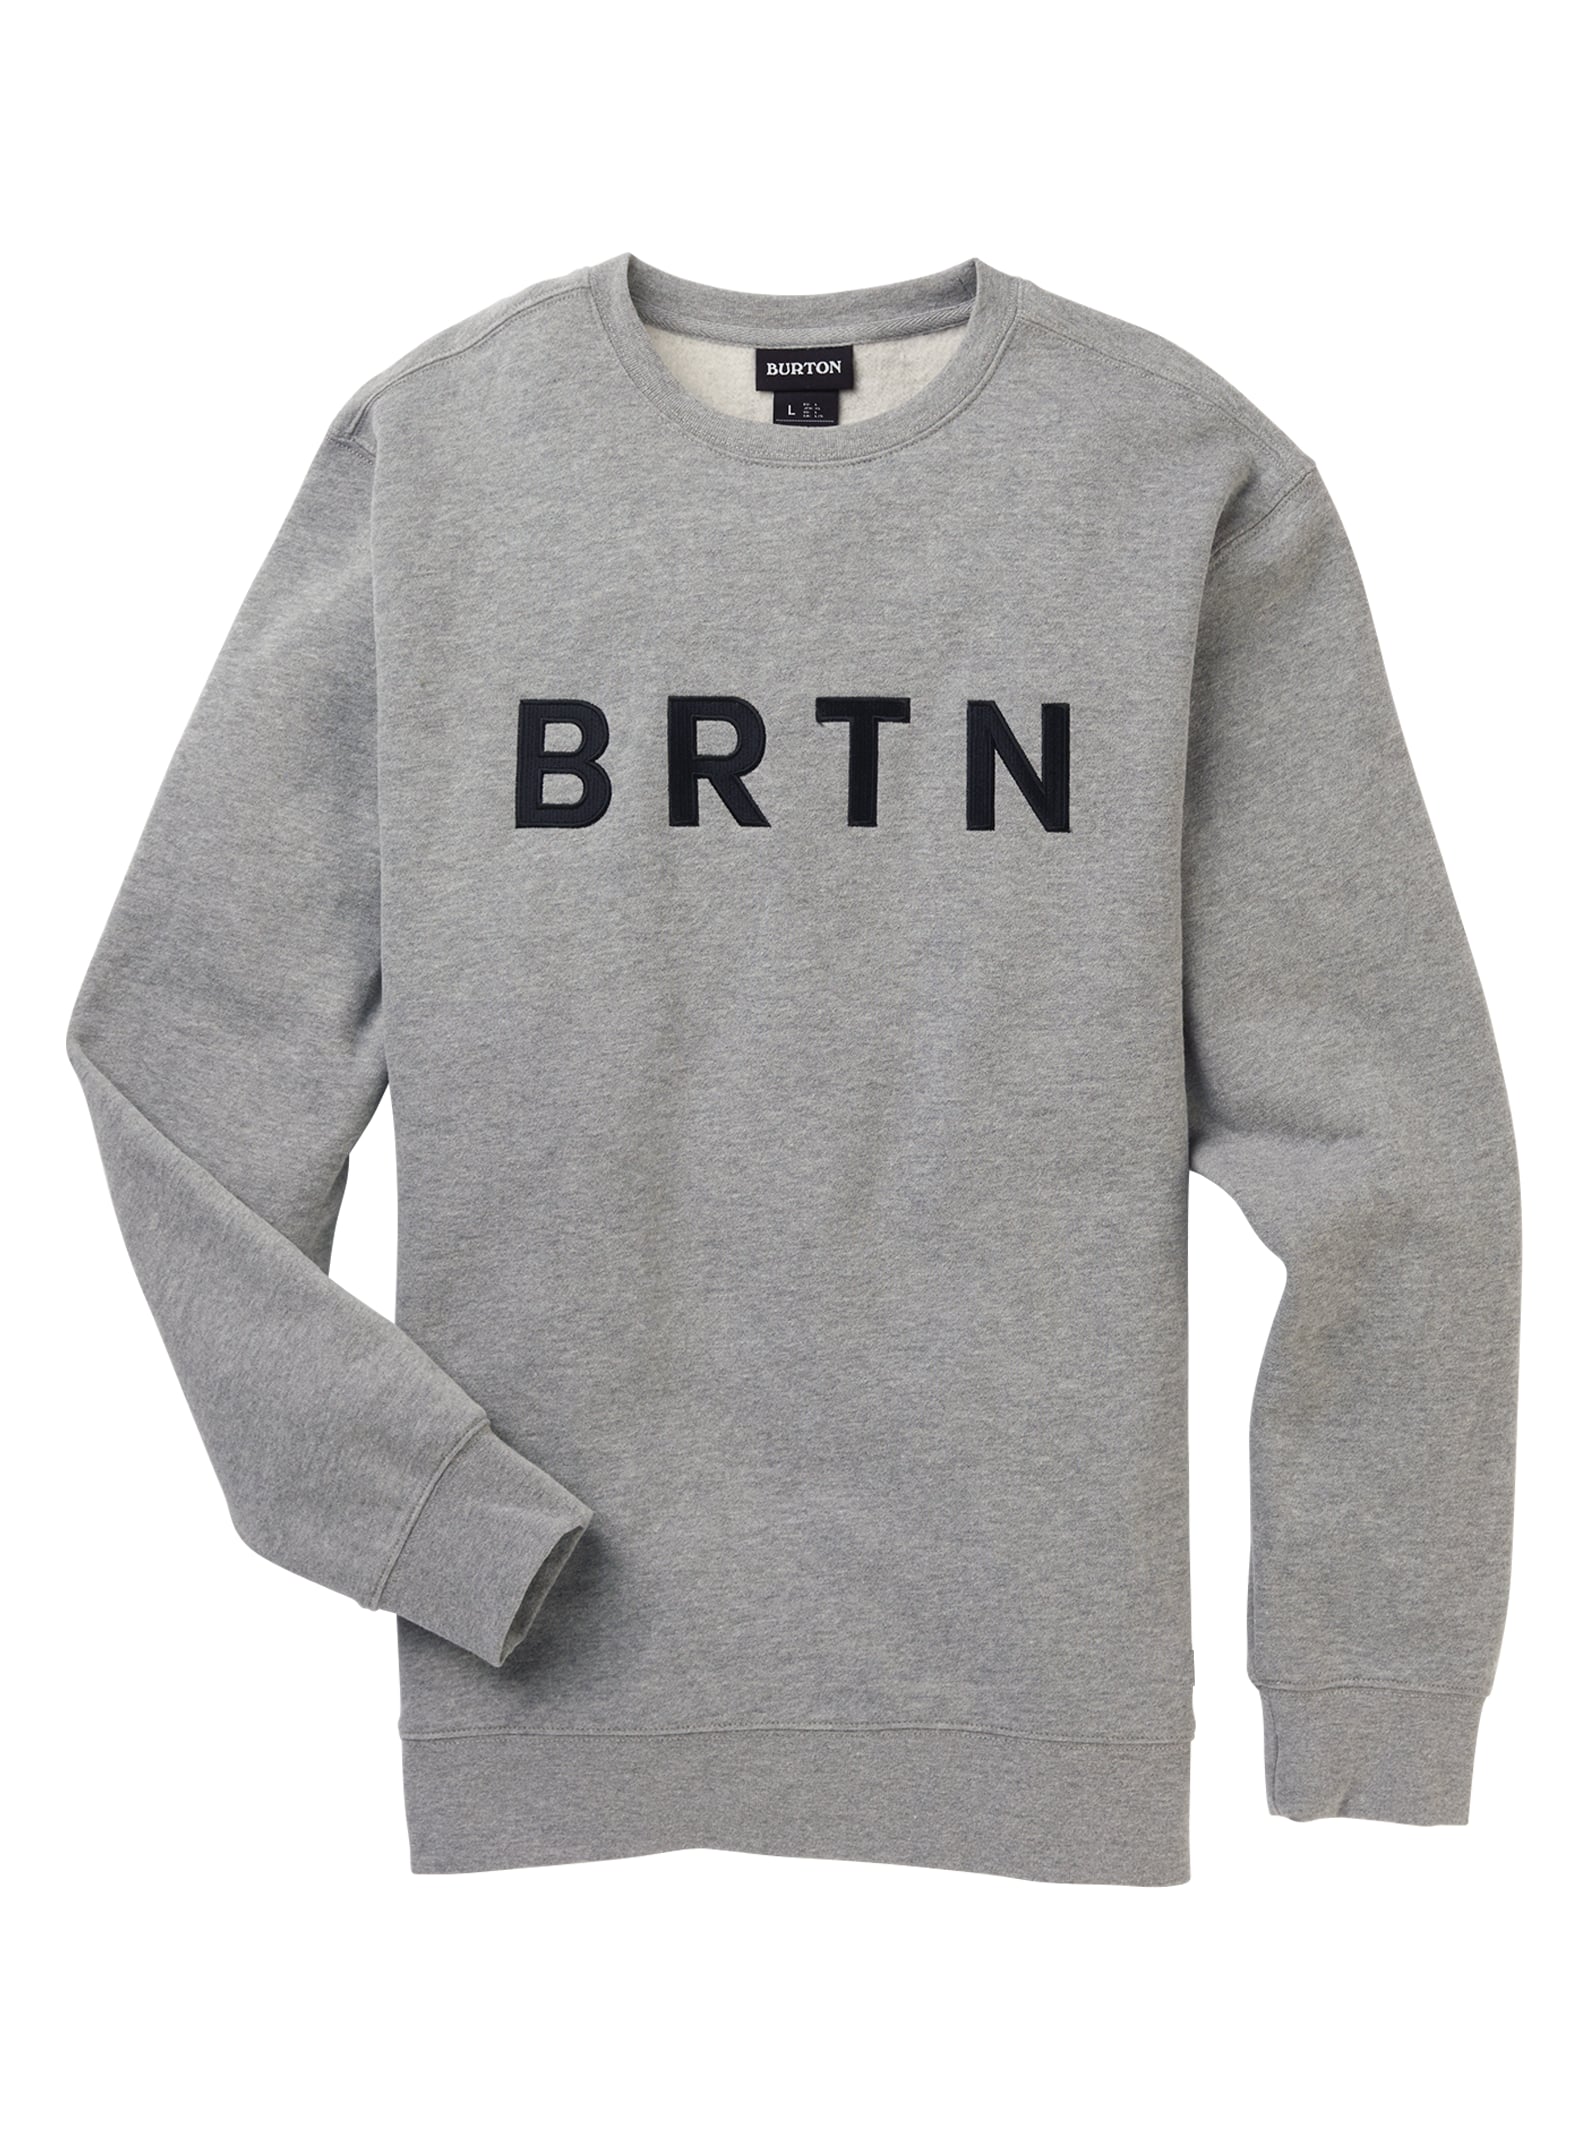 Martini Olive XL Burton Herren Brtn Sweatshirt 